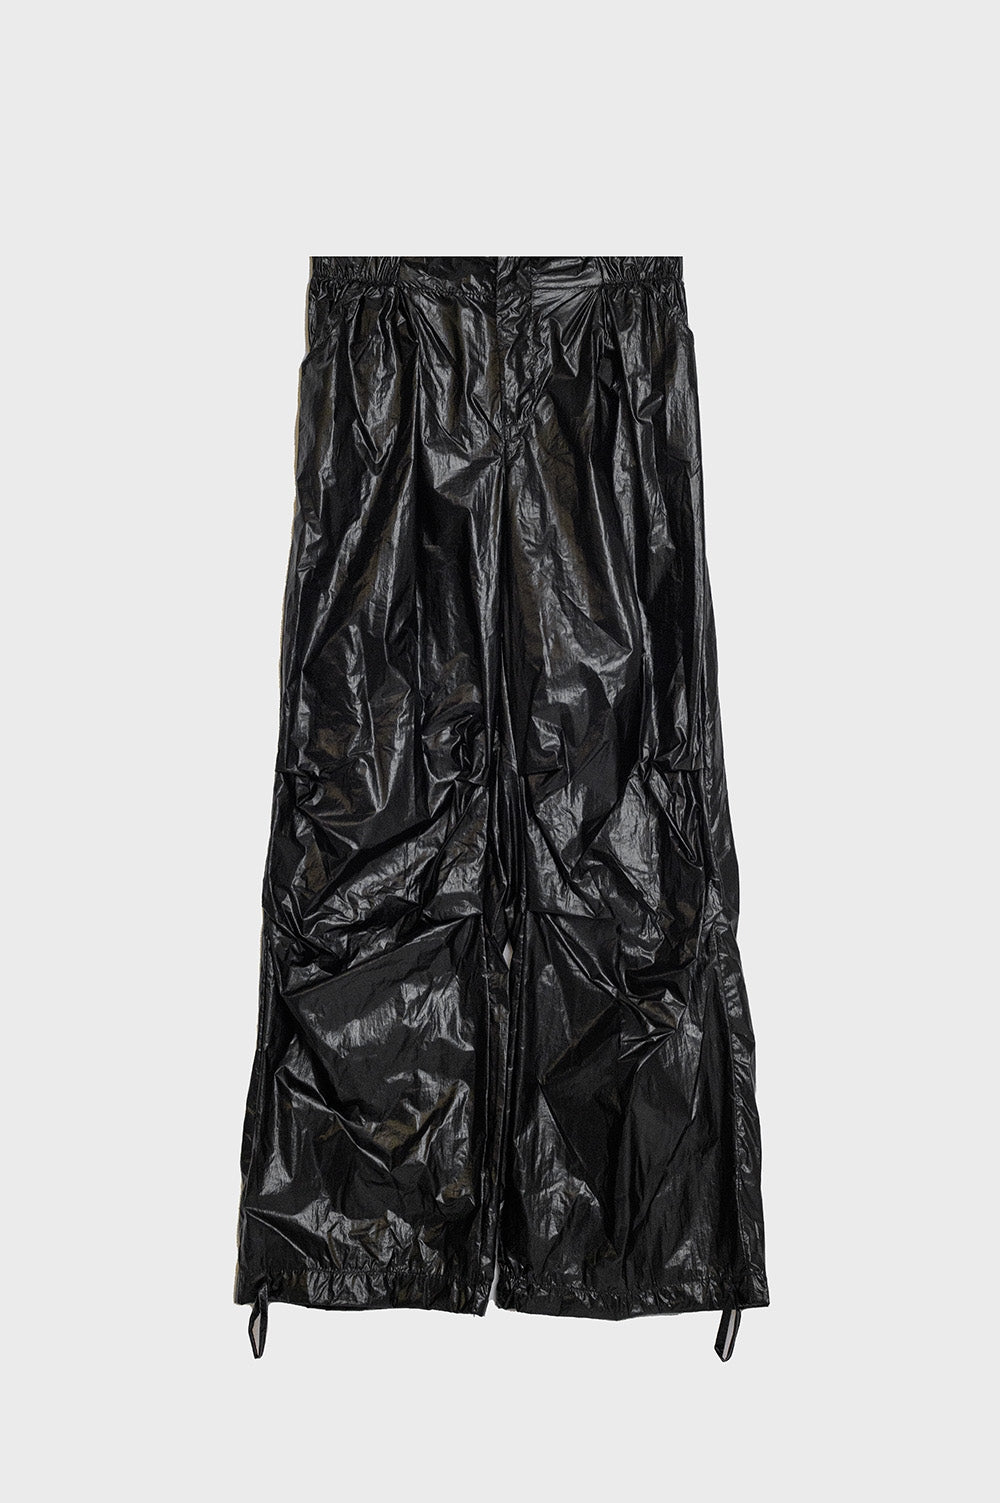 Q2 Pantaloni metallici con paracadute neri oversize